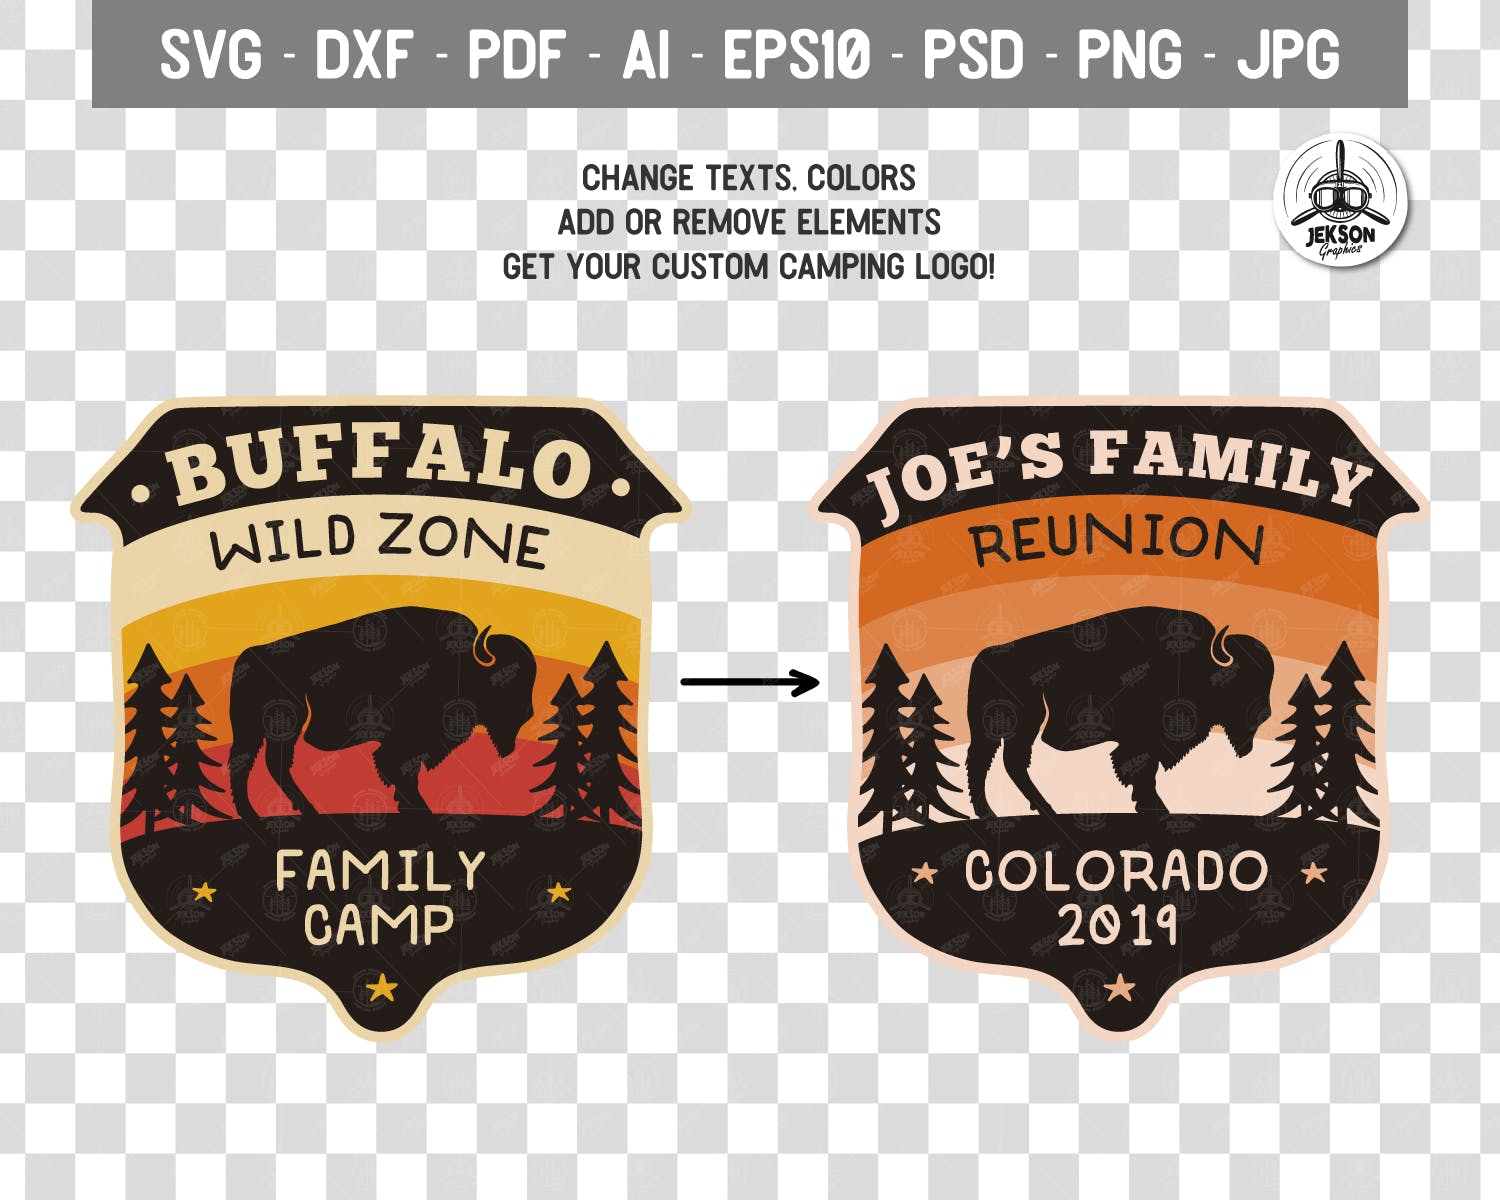 野营冒险/户外运动/旅游品牌Logo设计模板 Camping Adventure Badges, Retro Travel Logos Set插图(3)